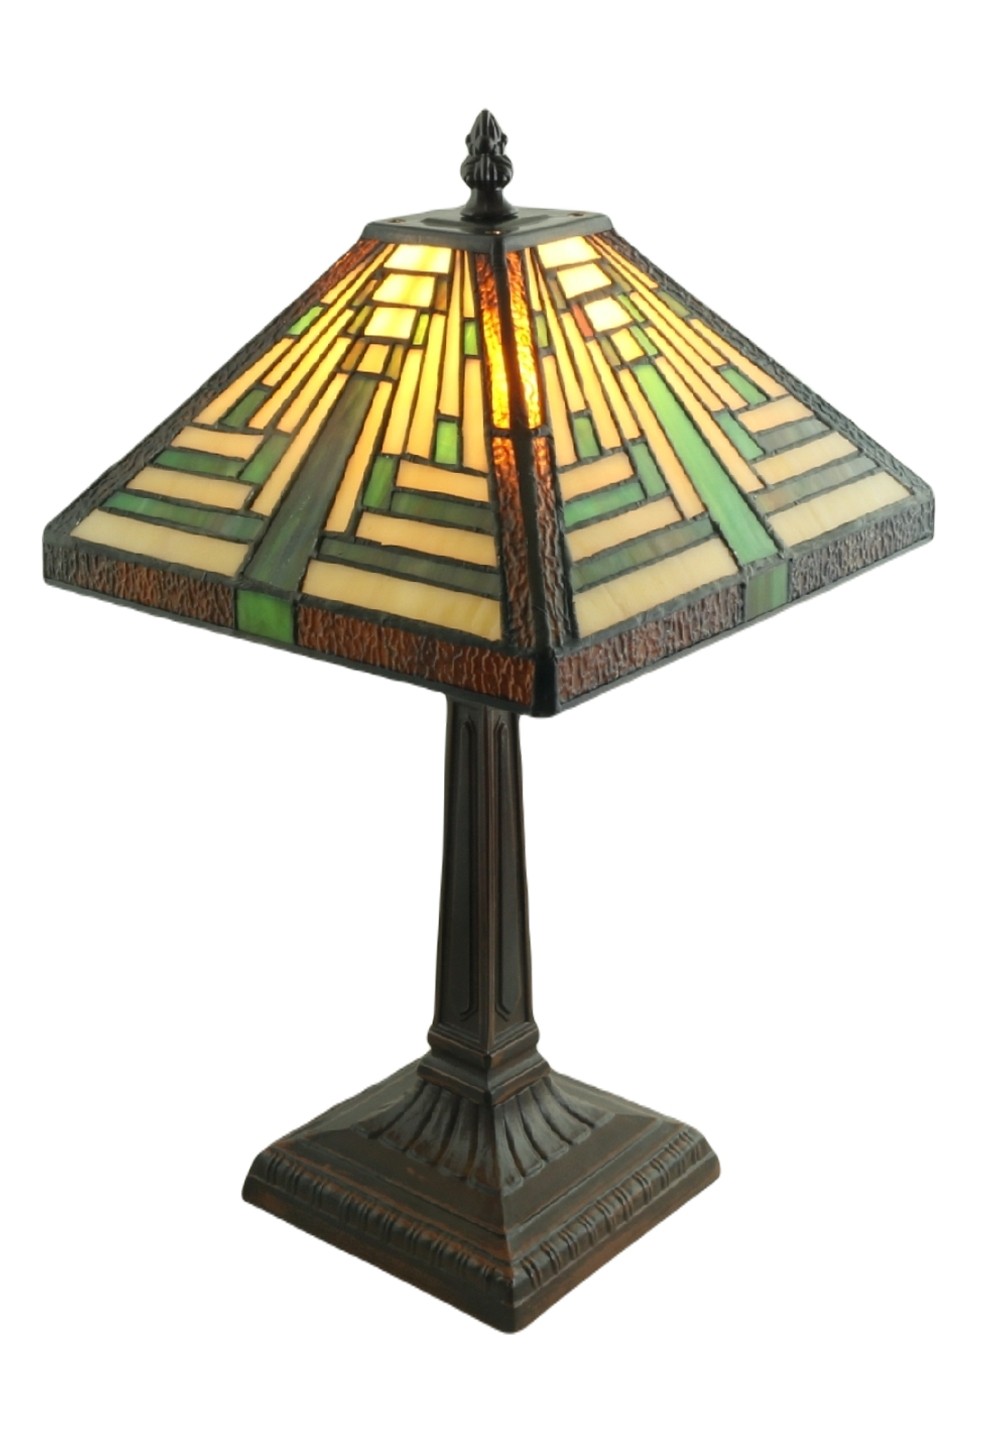 Pyramid Deco Tiffany Table Lamp - 38cm